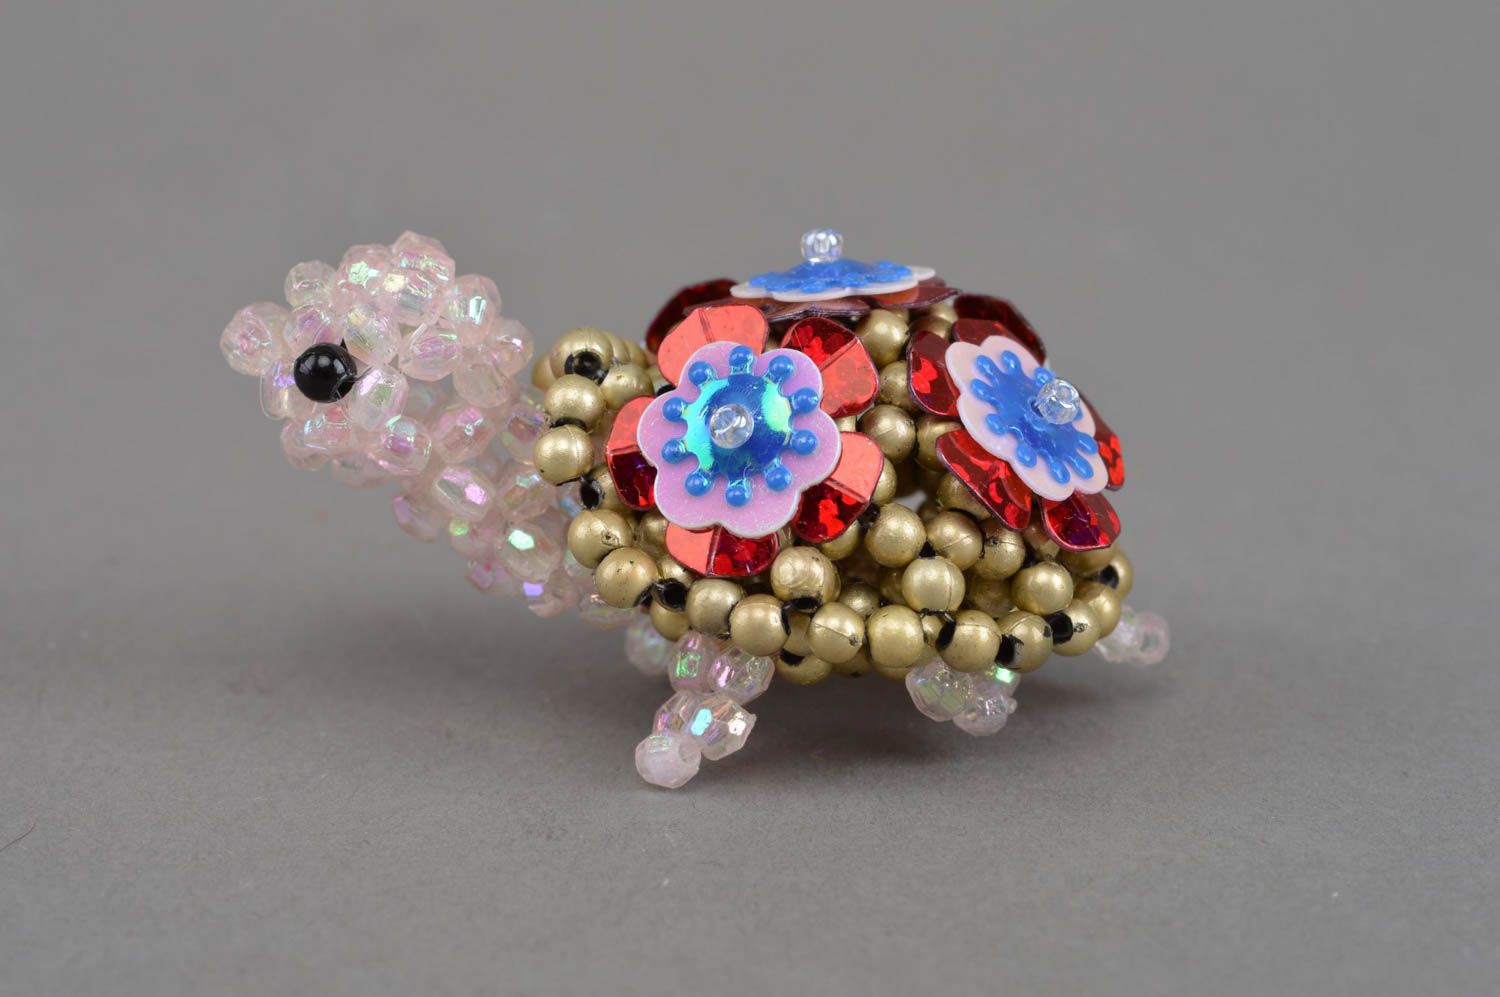 Handmade designer miniature bead woven figurine of turtle with flowers on armor photo 2